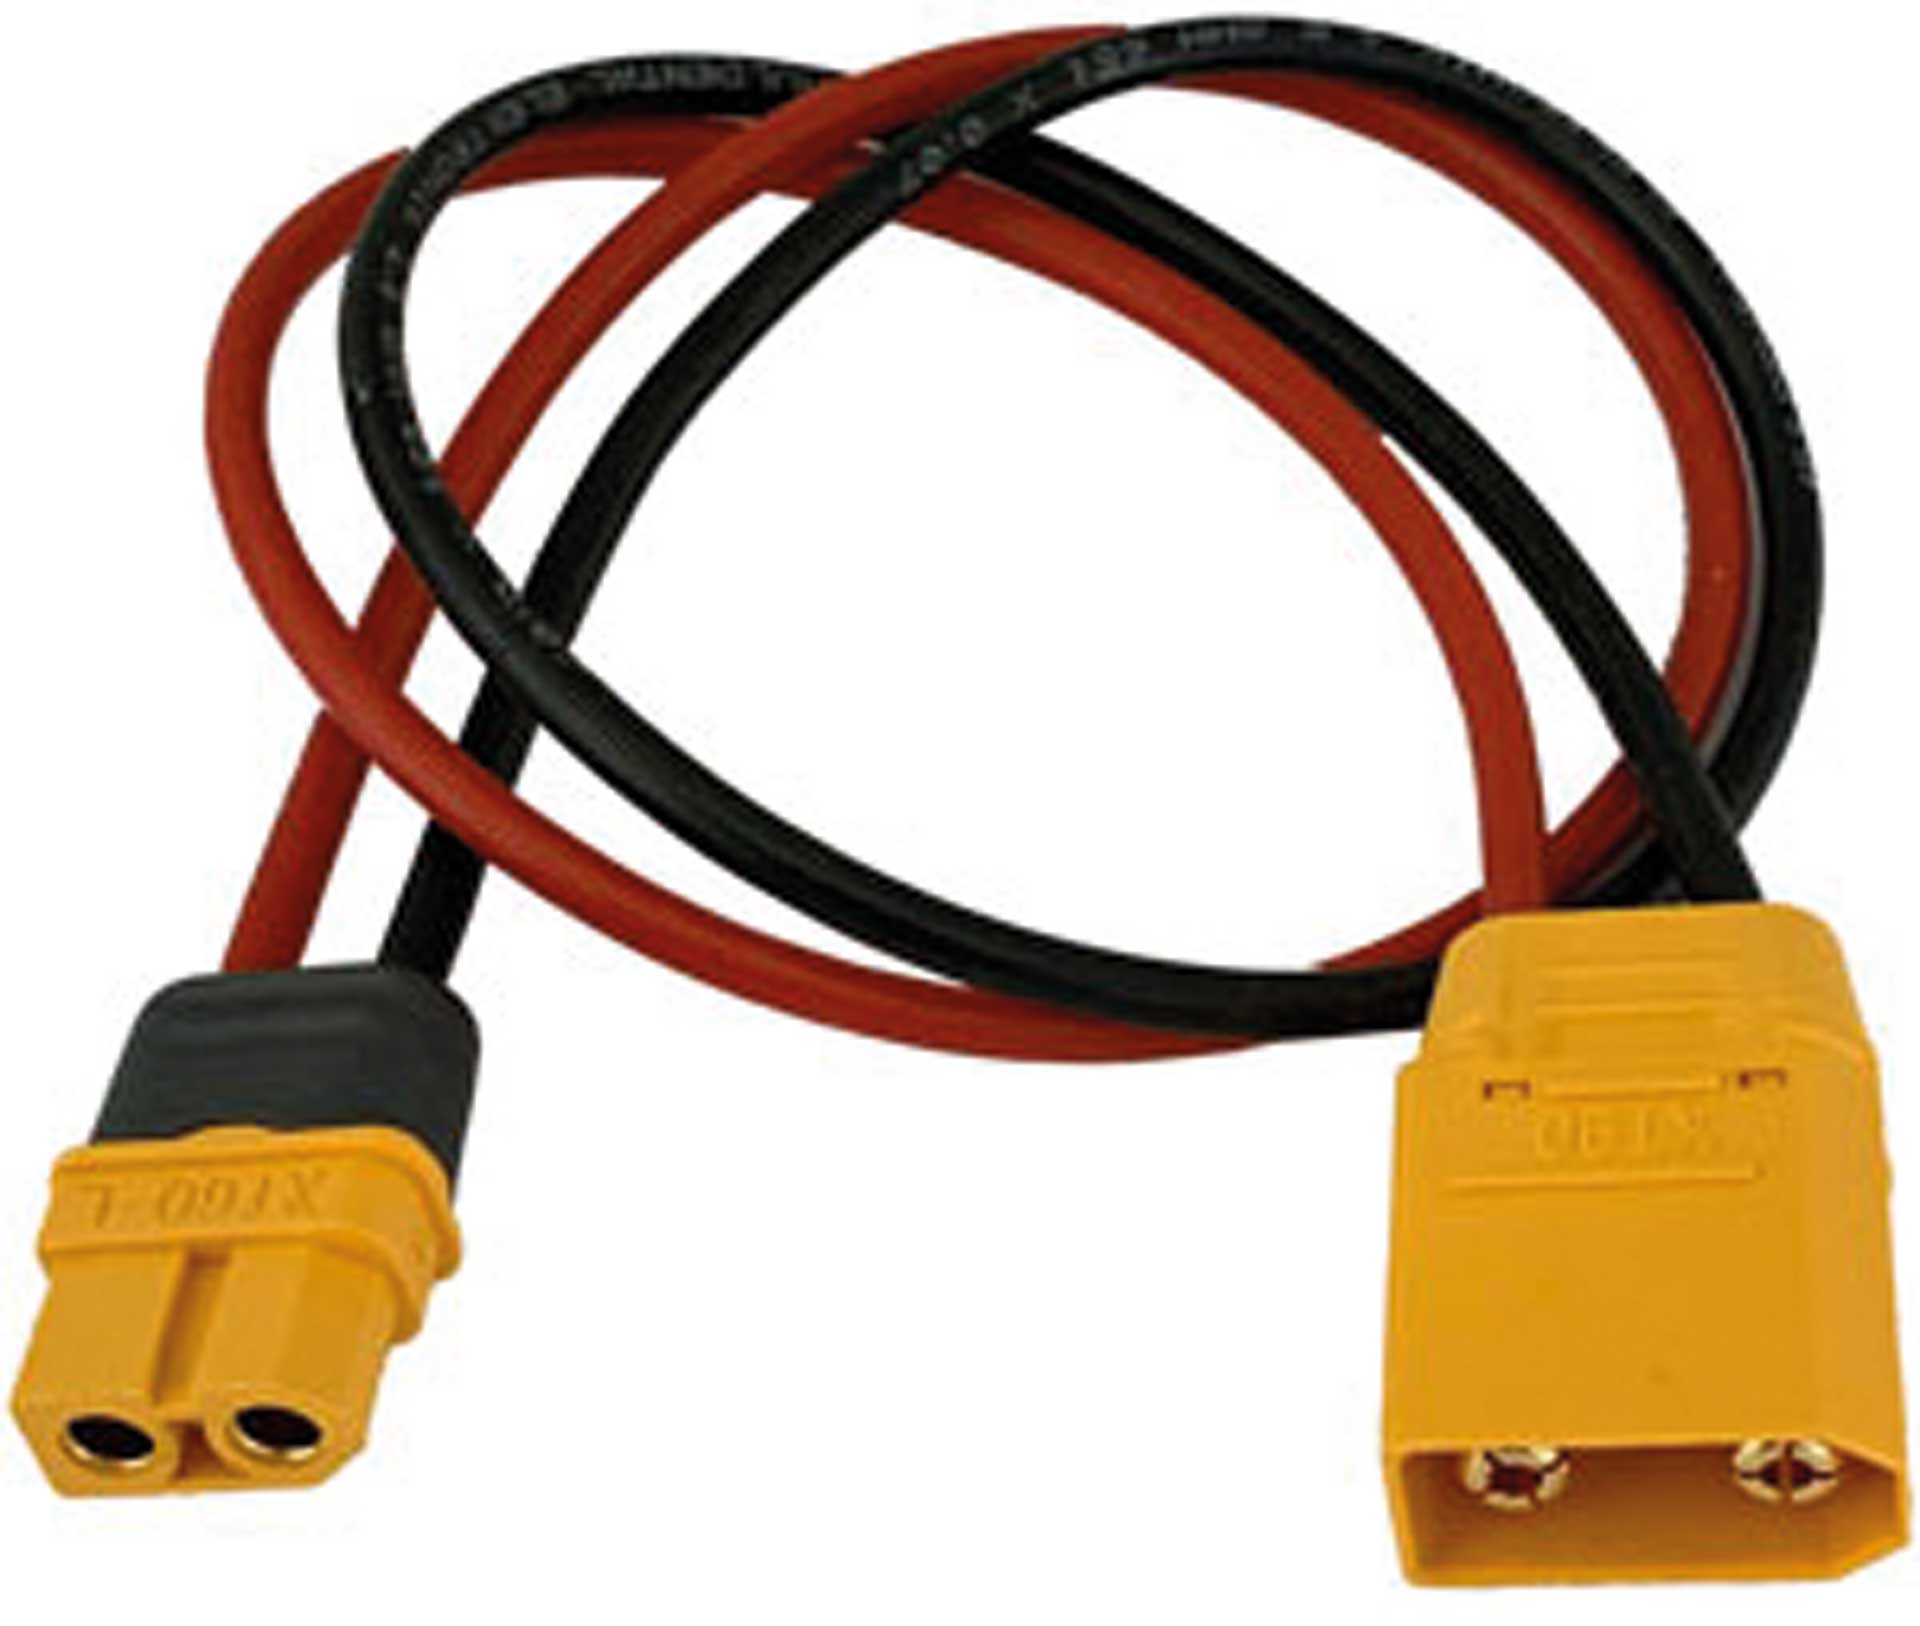 MULDENTAL XT-60 Charging Cable f. XT-90 Batteries